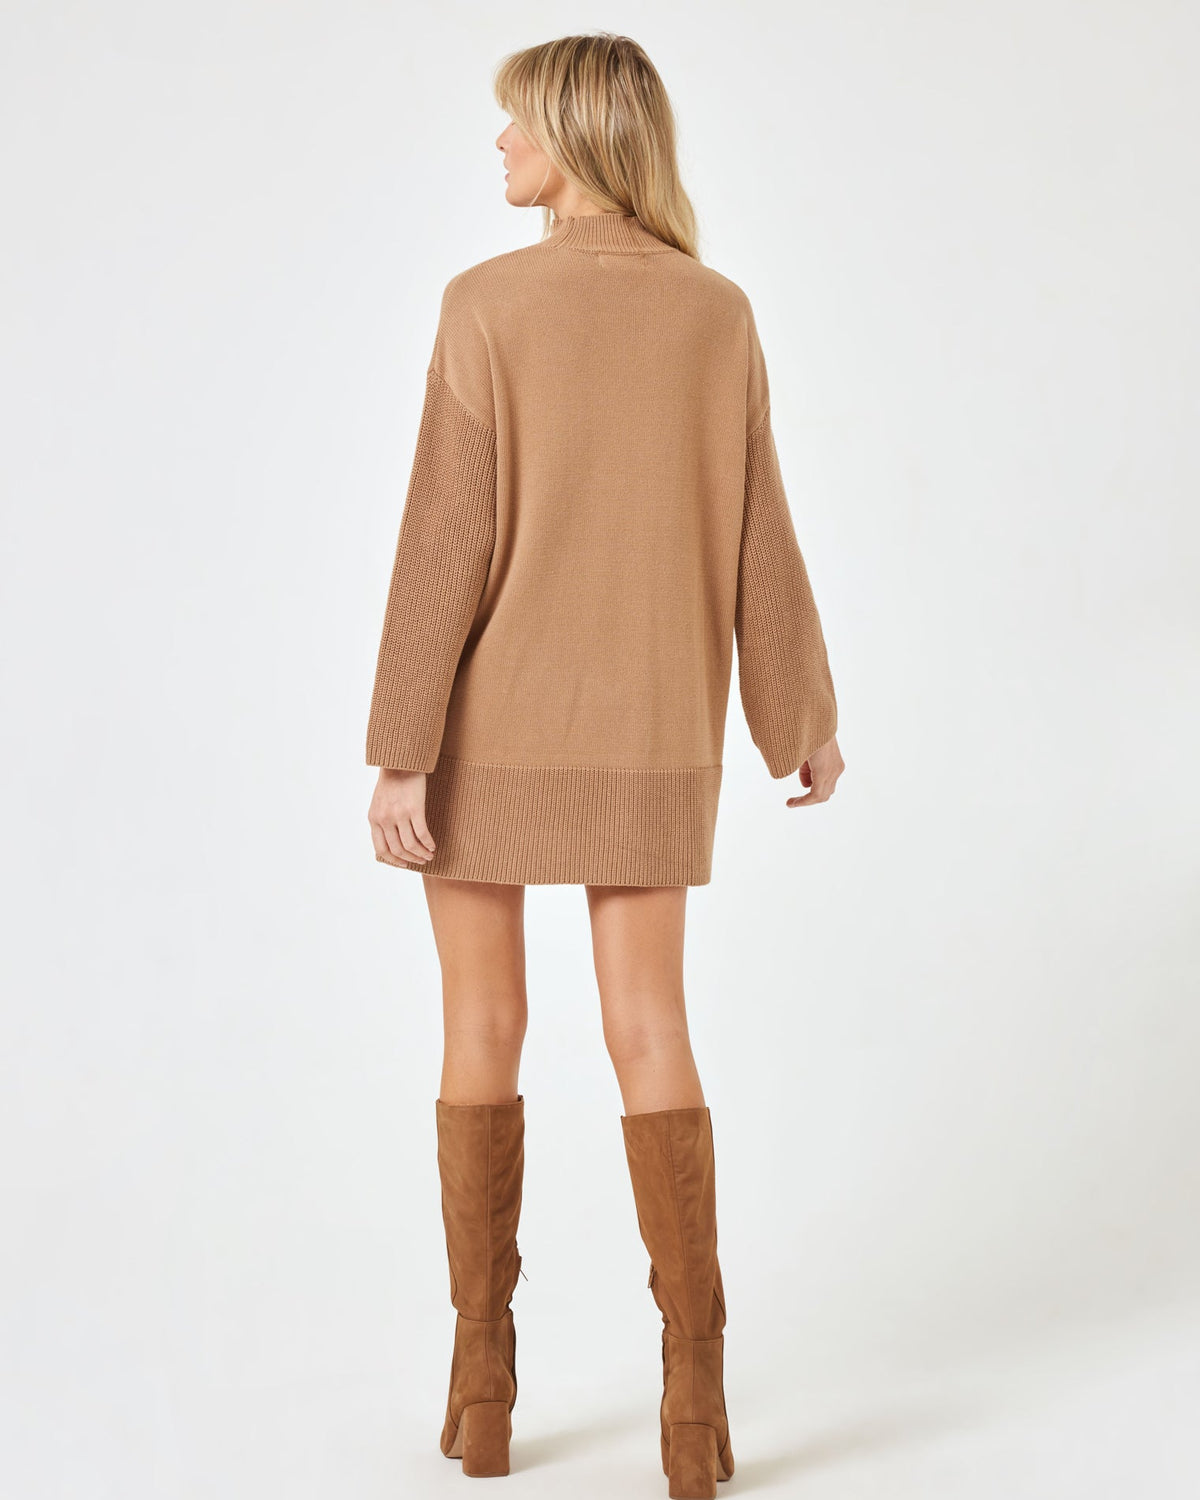 Lacy Dress Camel | Model: Lura (size: S)